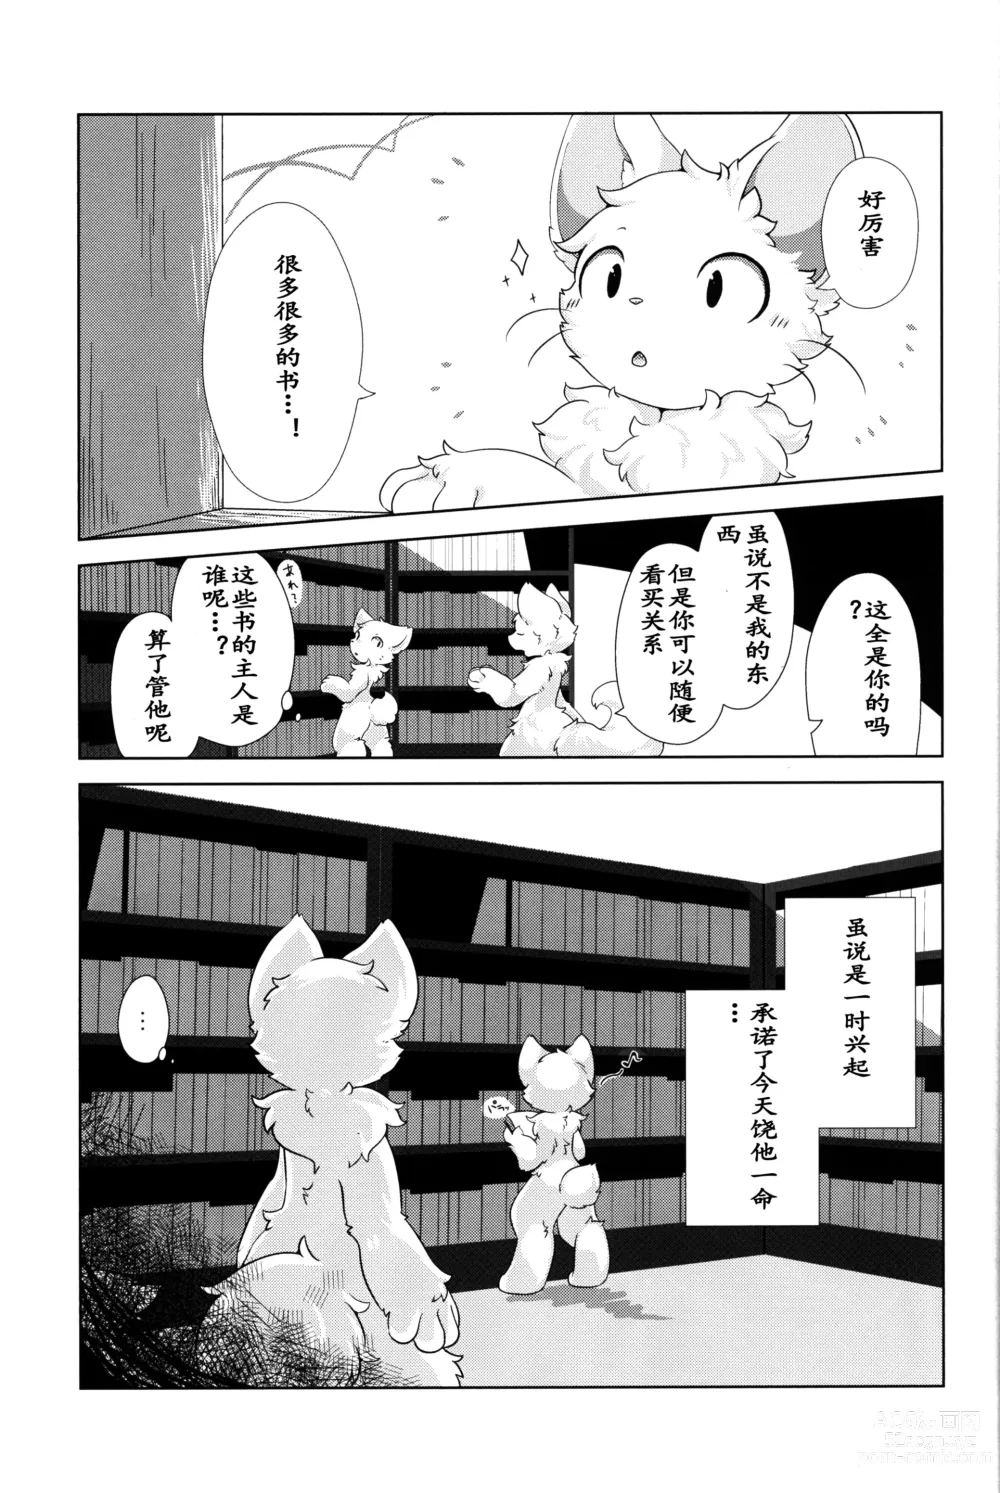 Page 24 of doujinshi 我亲爱的杀人鬼